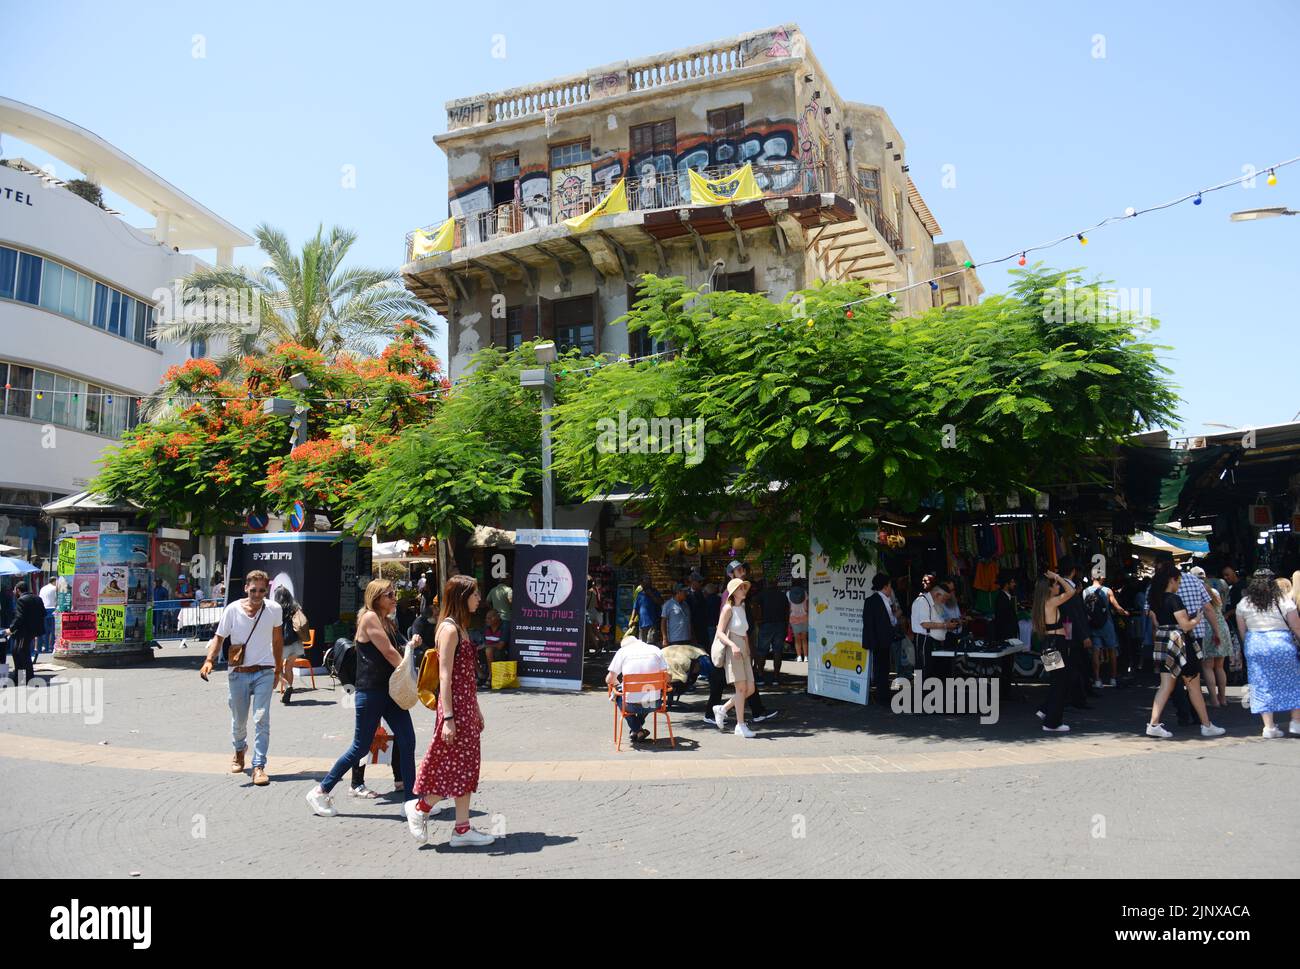 Entrance to the Carmel market from Allenby street in Tel-Aviv, Israel. Stock Photo